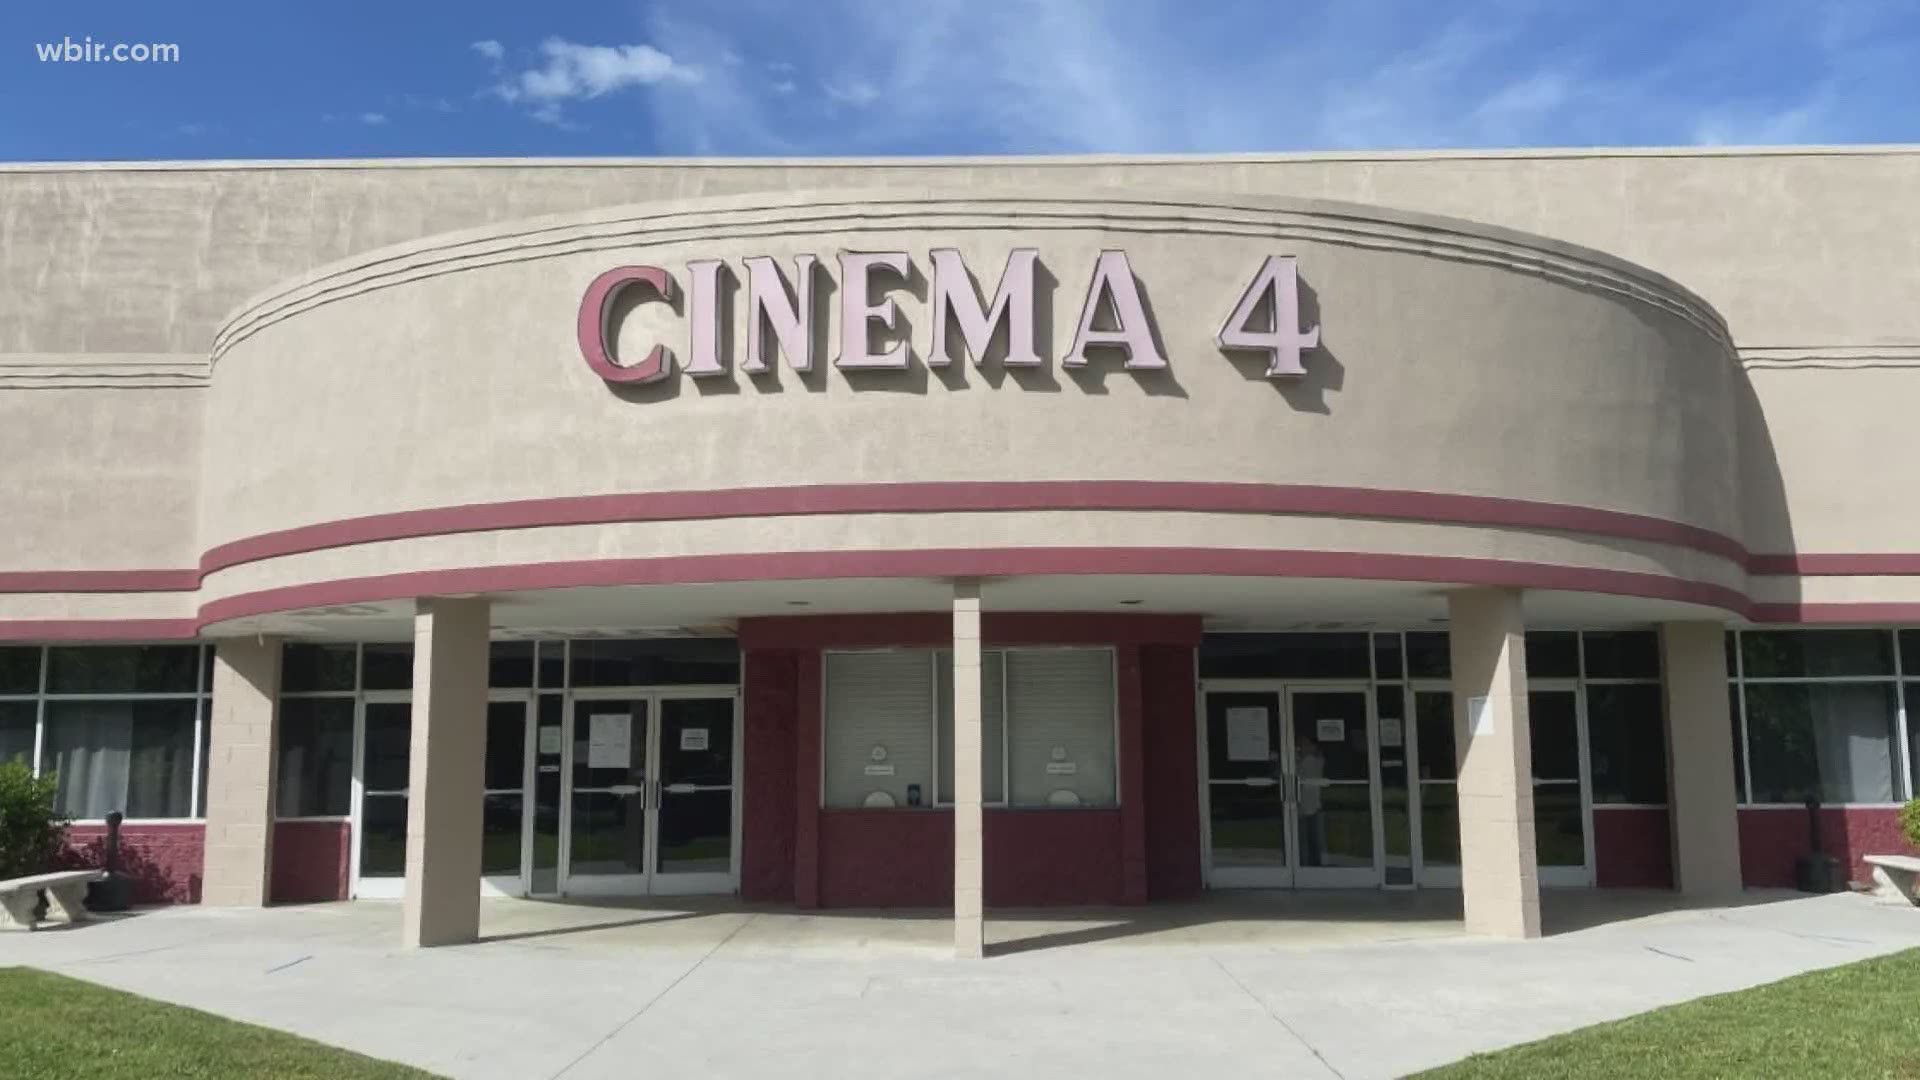 Newport Cinema 4 reopening Friday